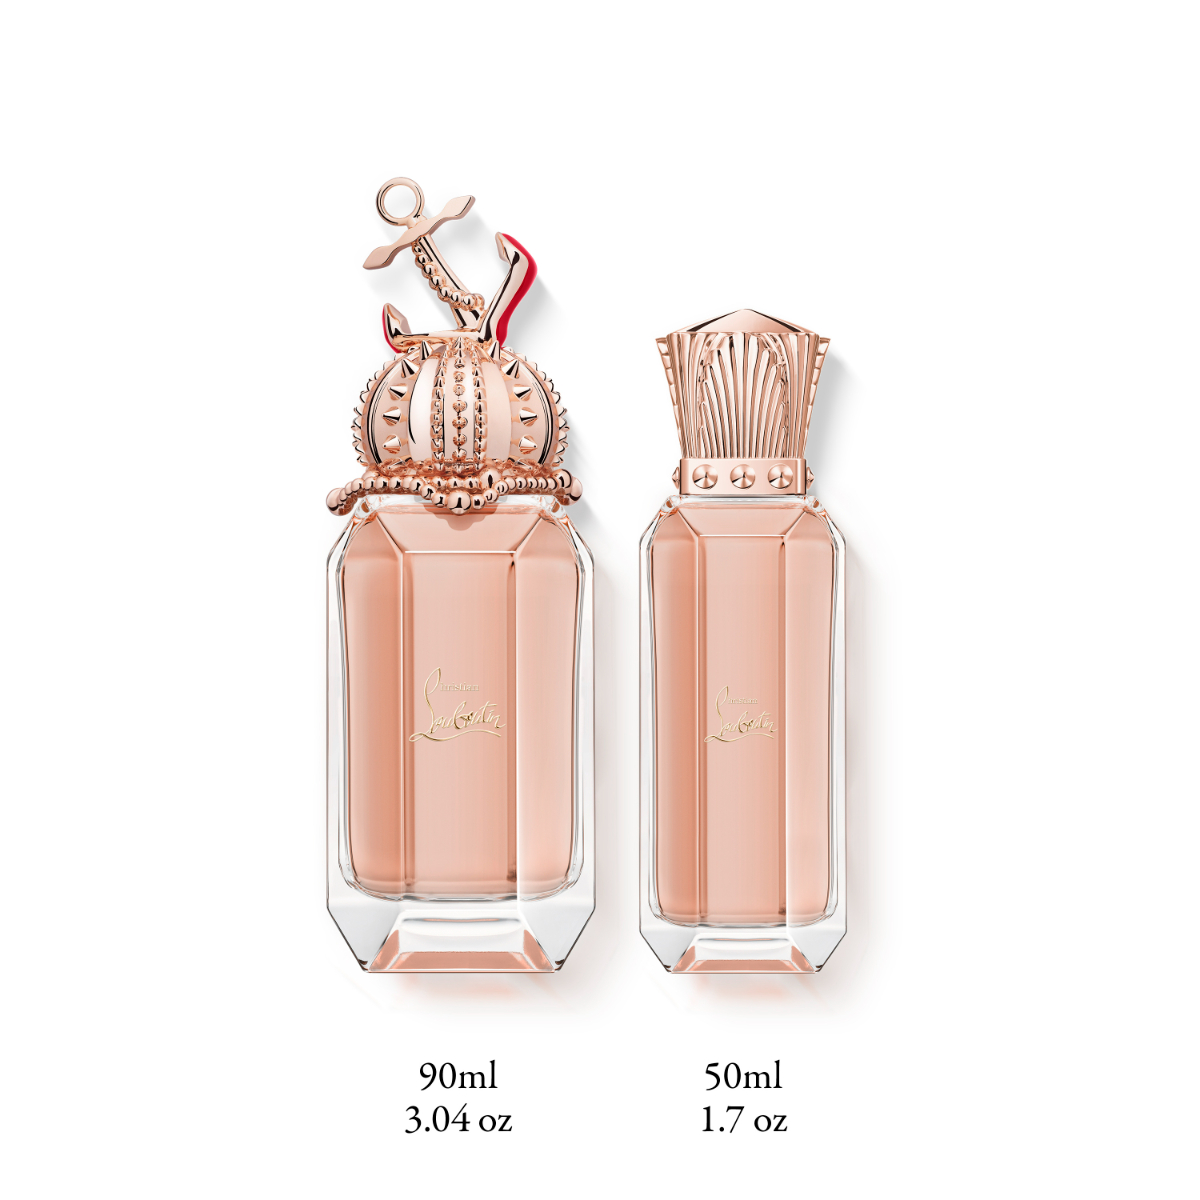 Christian Louboutin Perfumes - 2015 new release